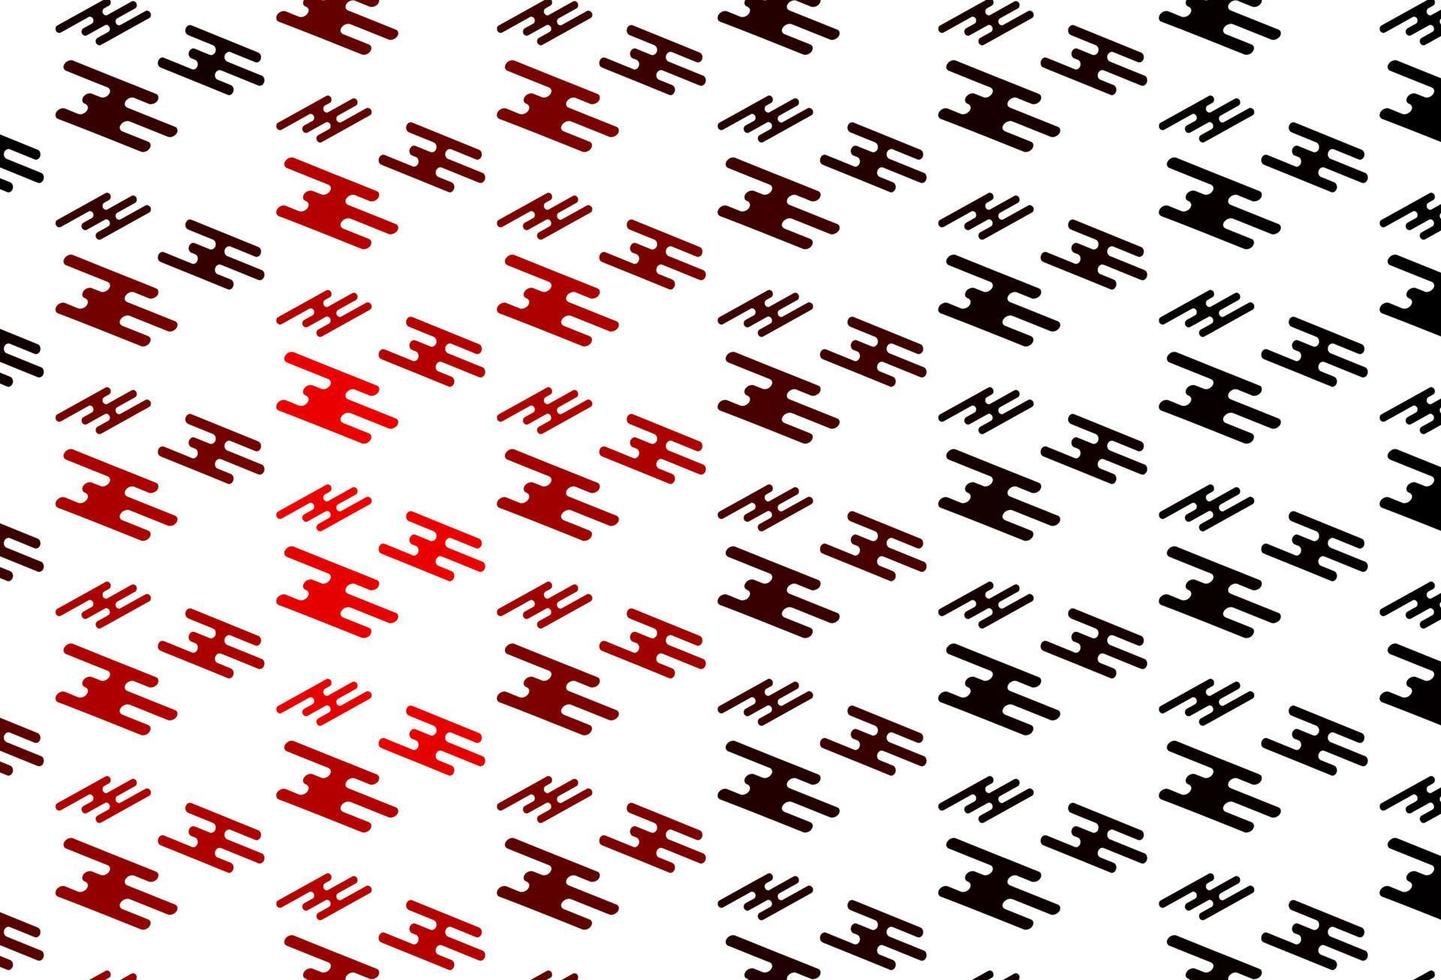 Telón de fondo de vector rojo claro con líneas largas.